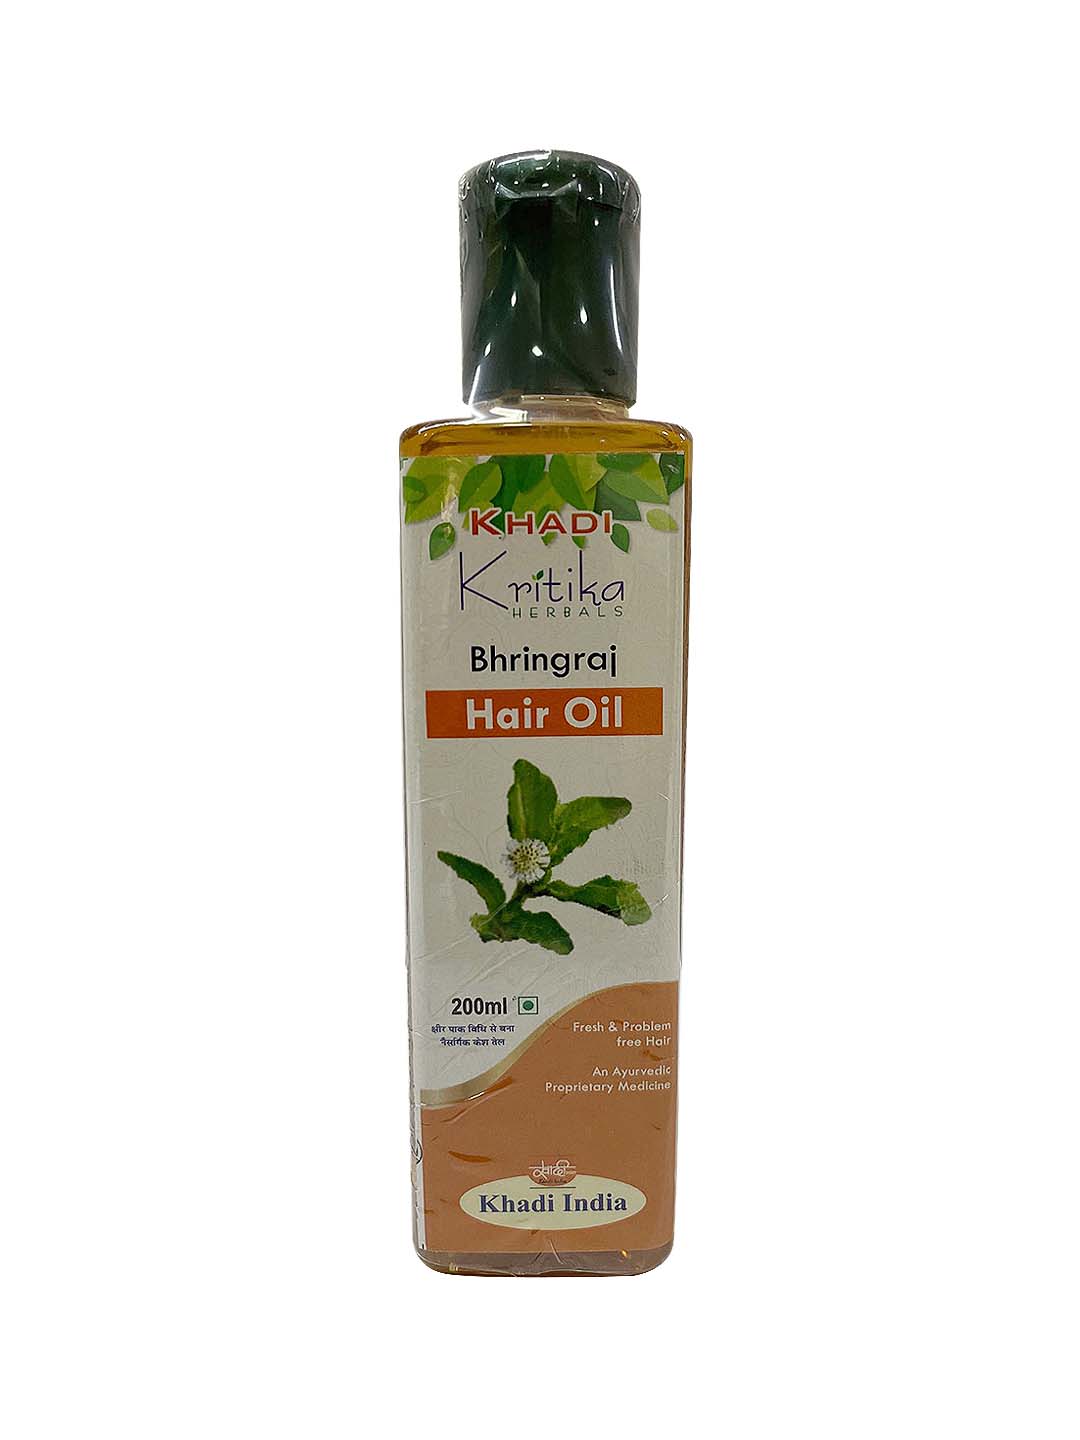 Biosash Seabuckthorn hair oil  honest review must watch  YouTube